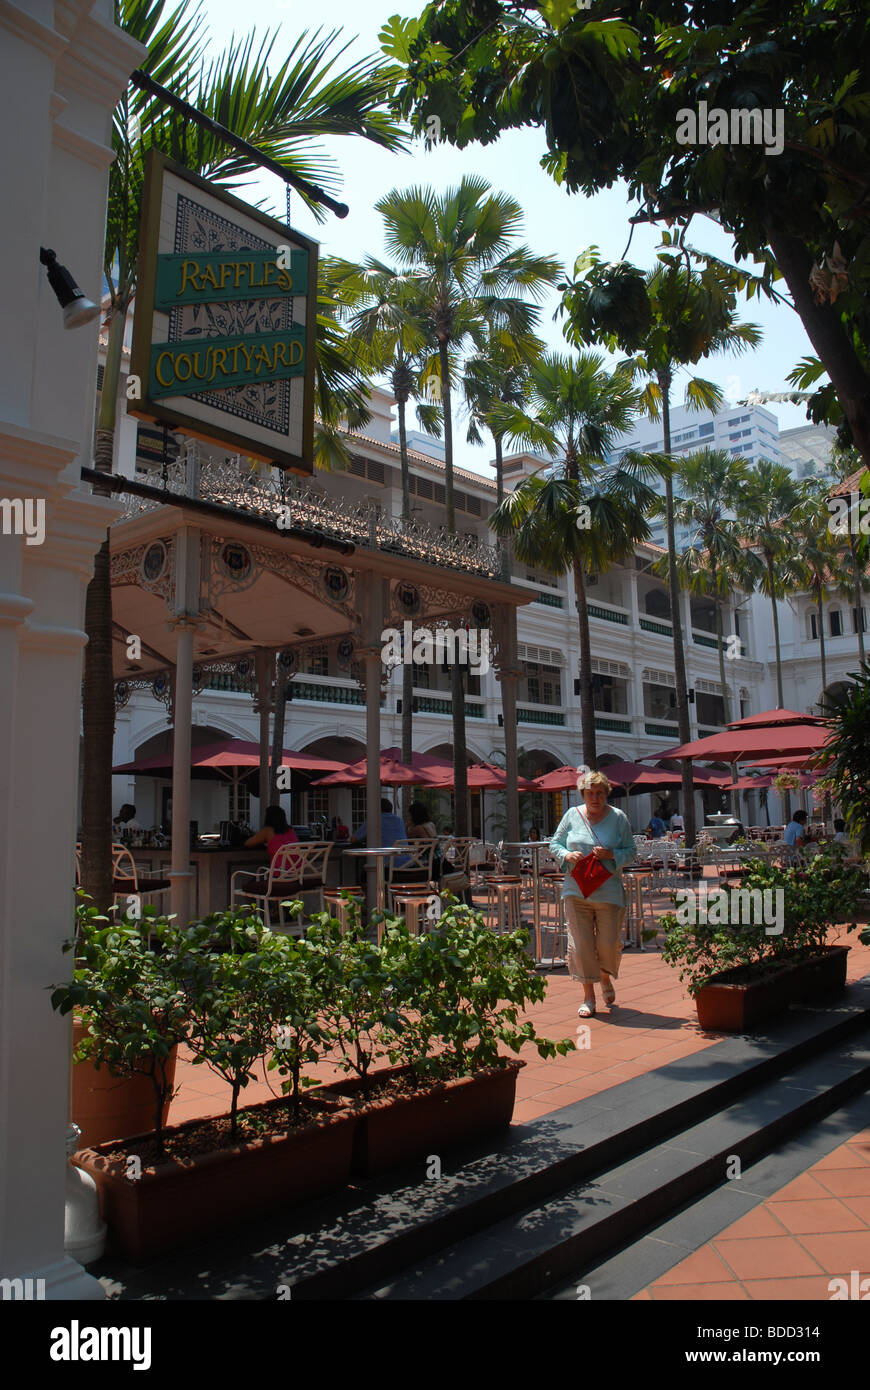 Gazebo Bar and Raffles Courtyard, Raffles Hotel, Singapore Stock Photo